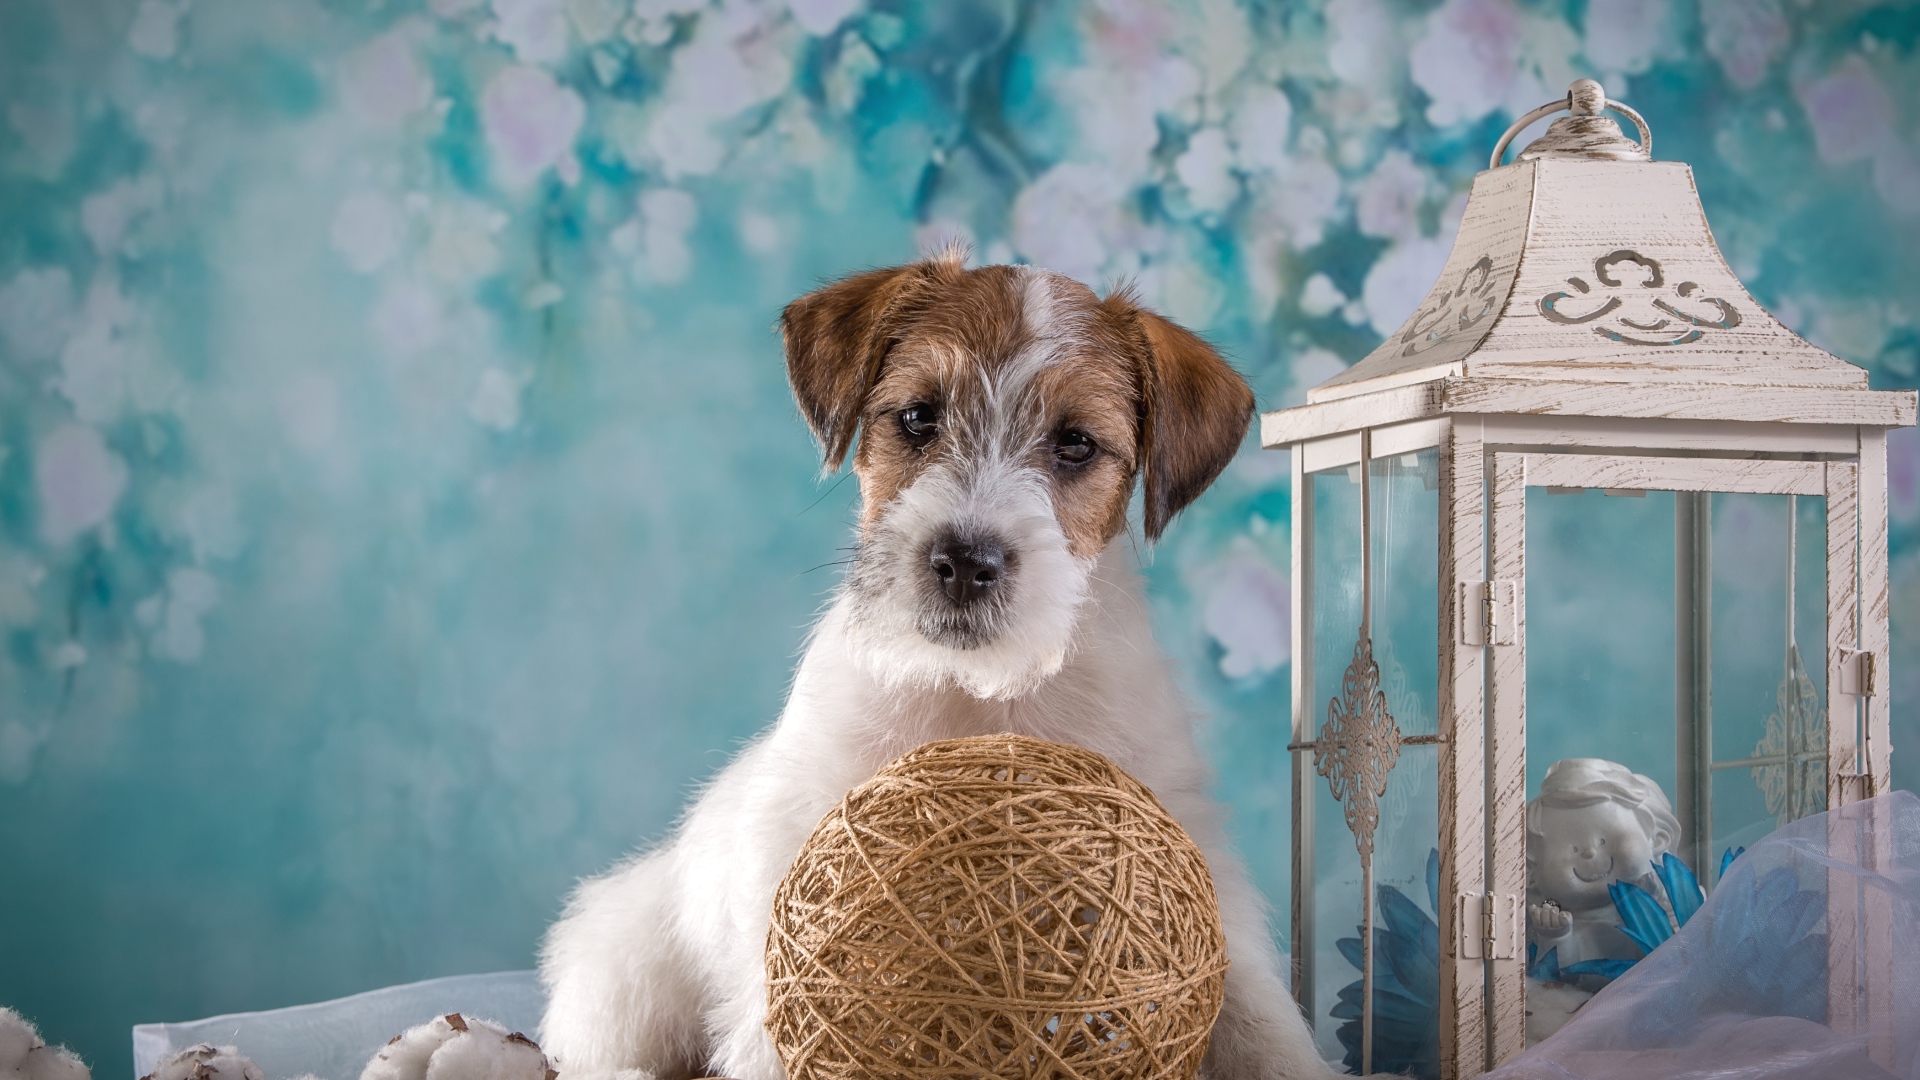 Puppy Sealyham Terrier with a decor